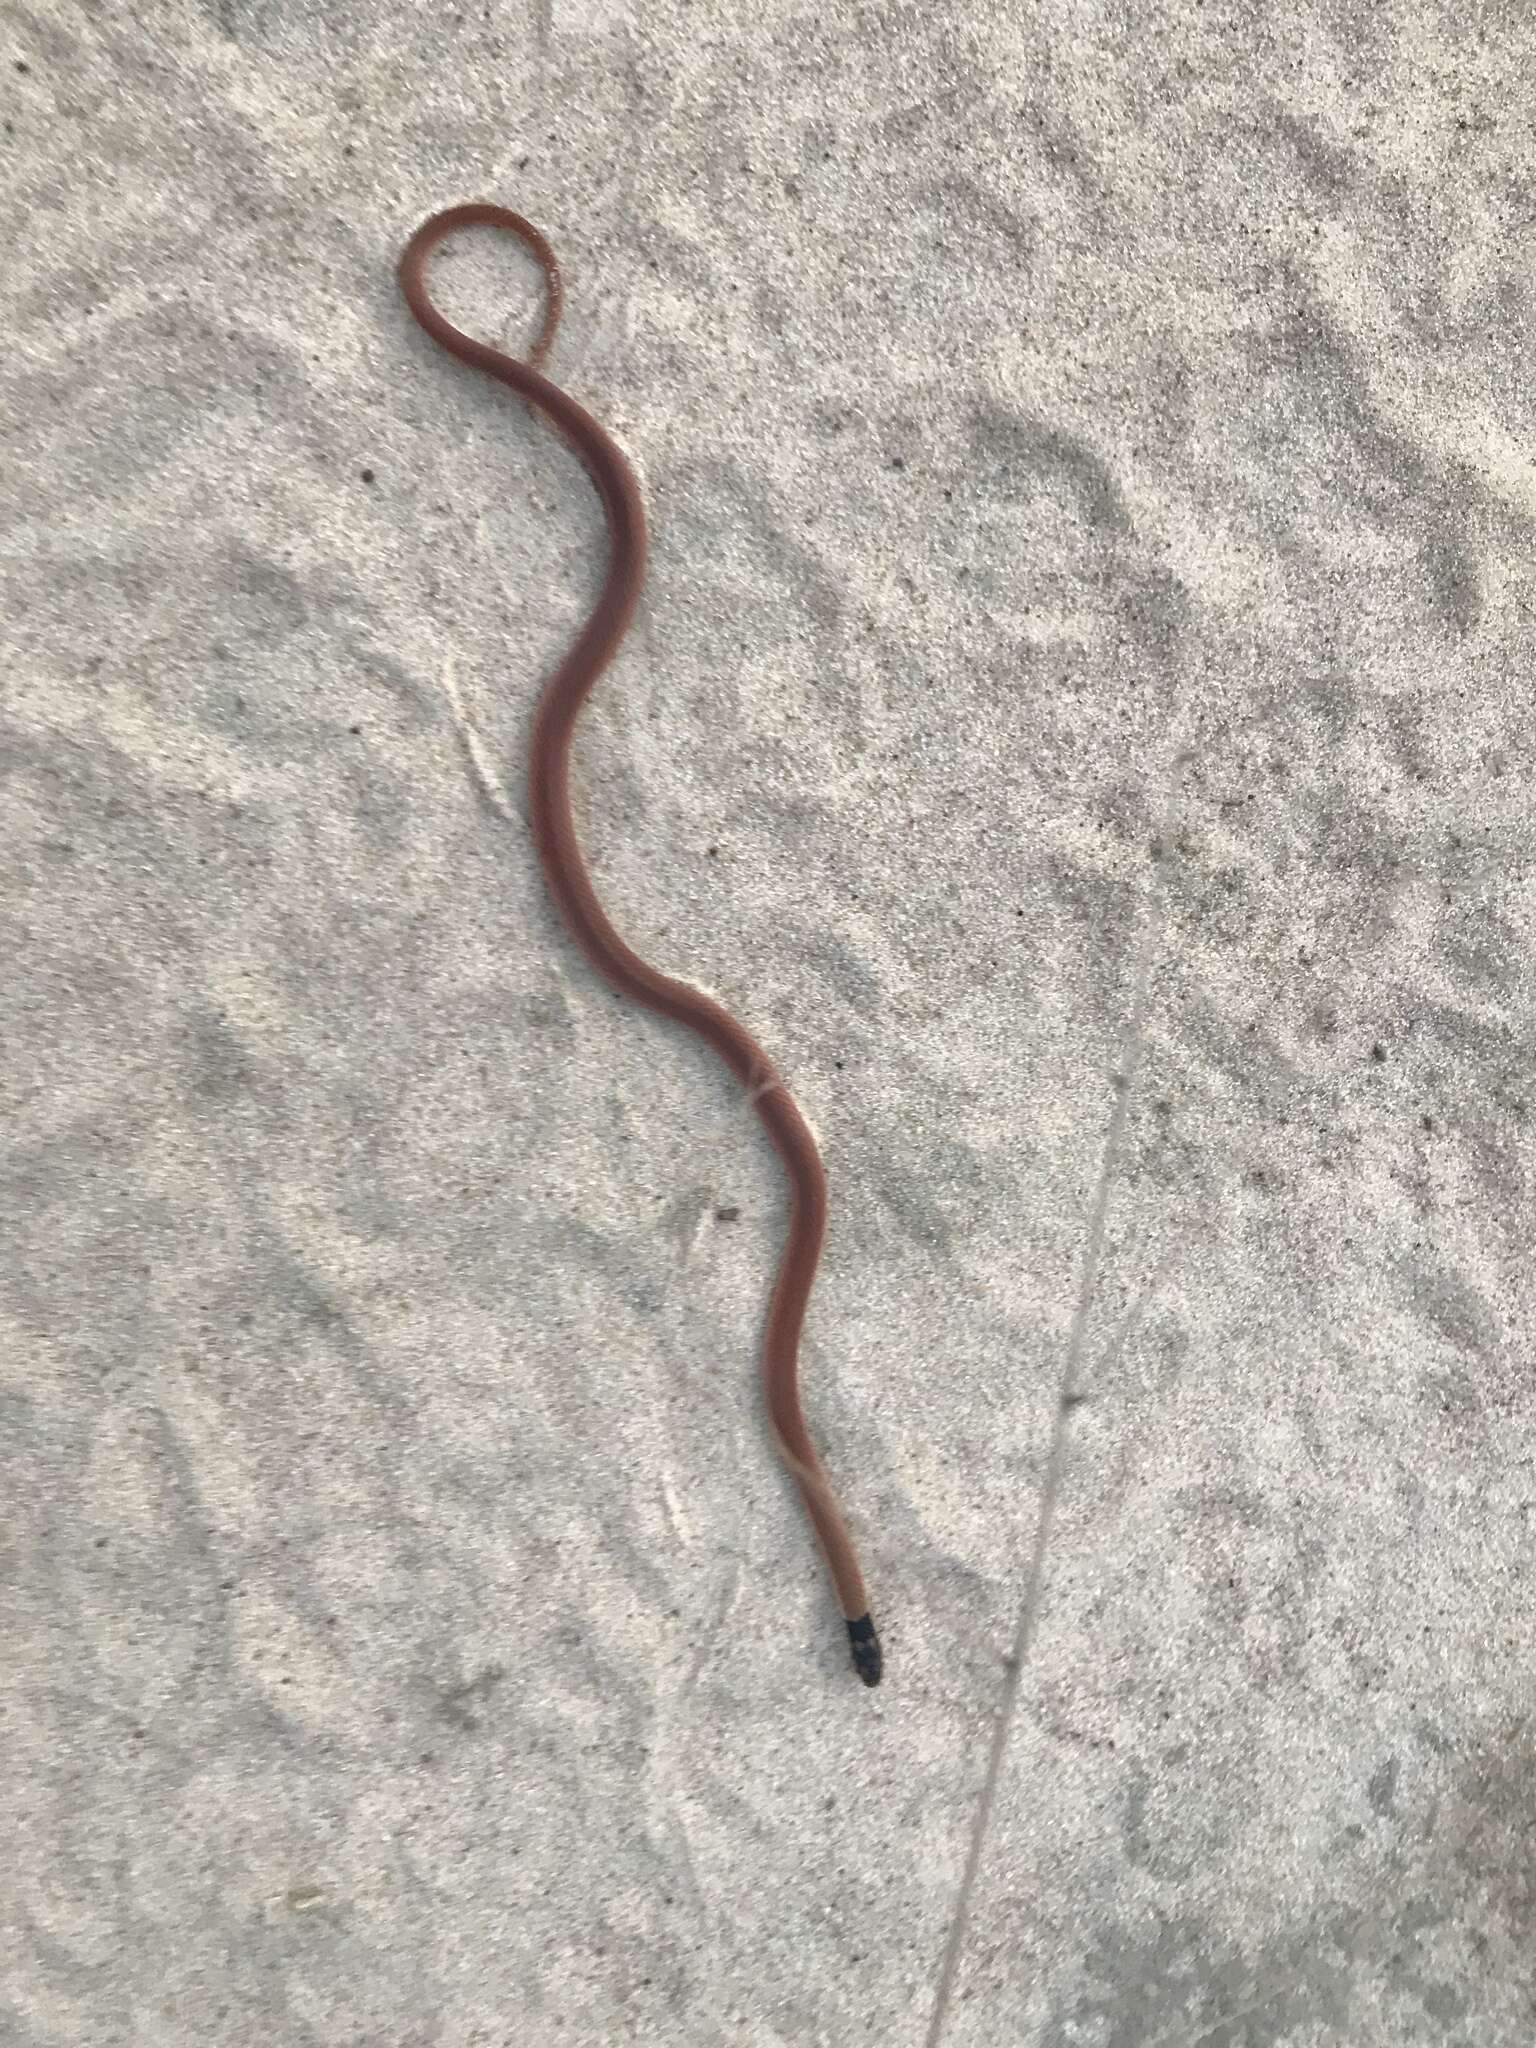 Image of Black-headed Snake (equatoriana